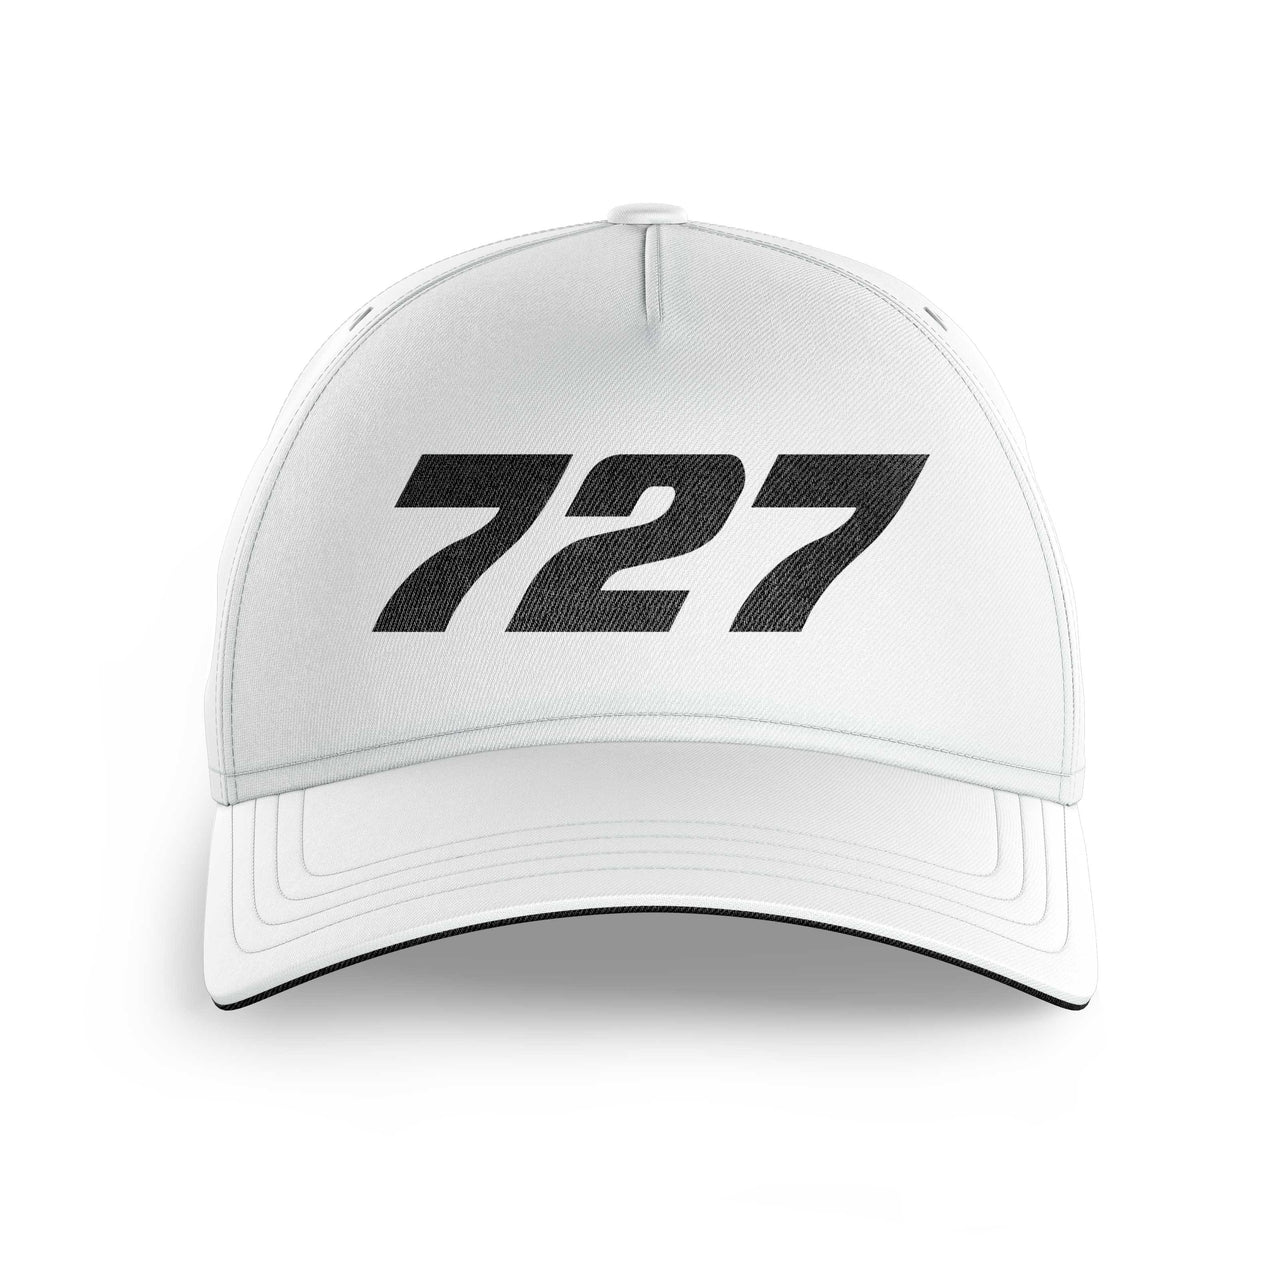 727 Flat Text Printed Hats